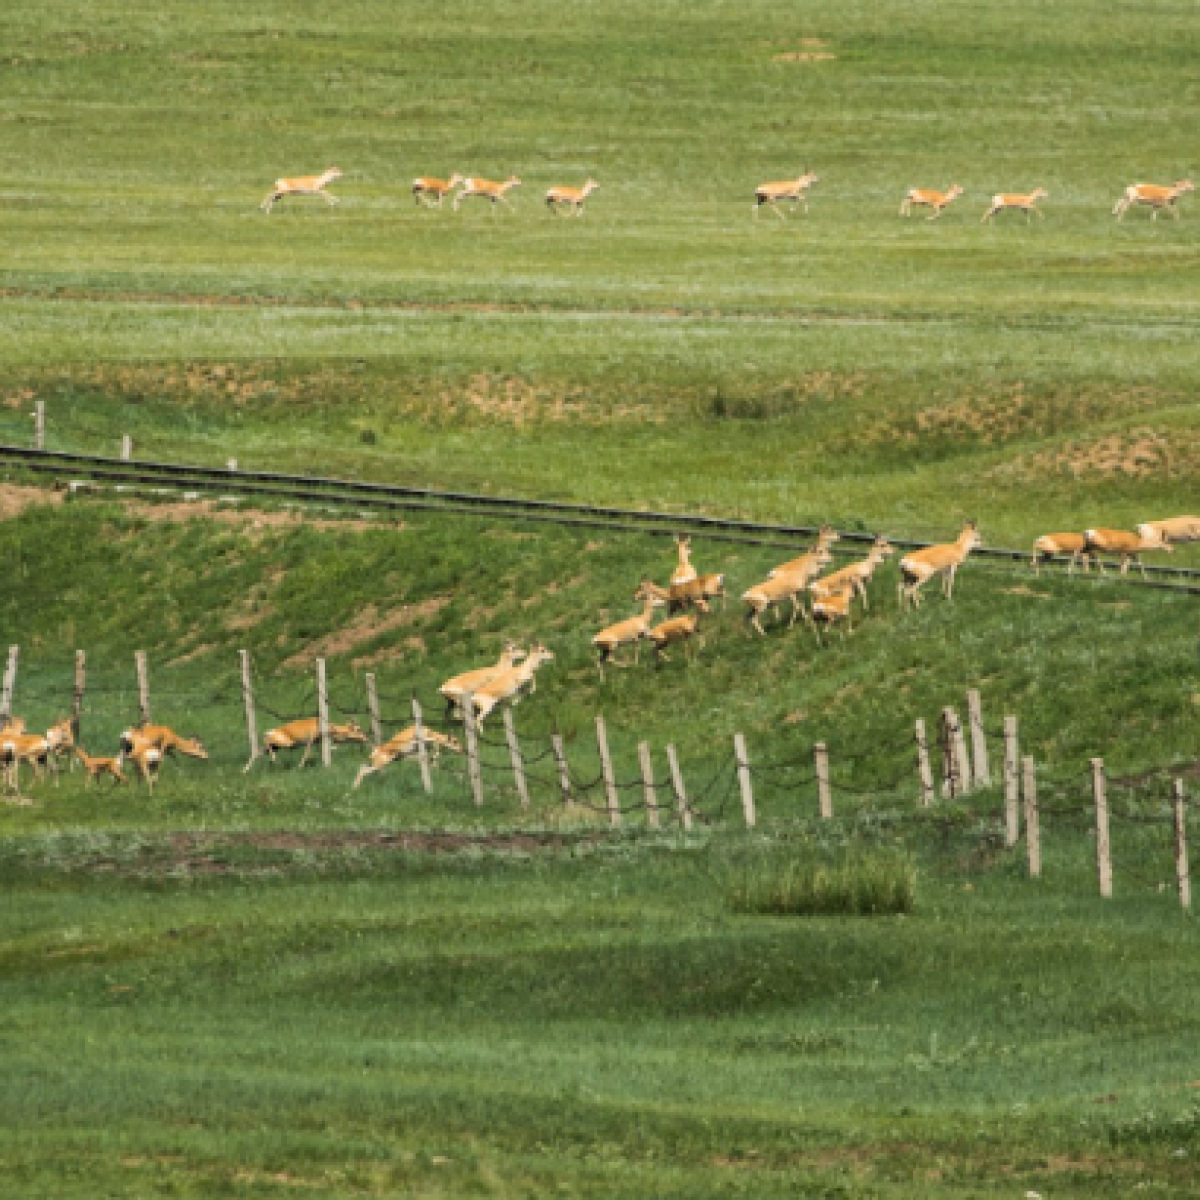 Herd of deer moving through a field